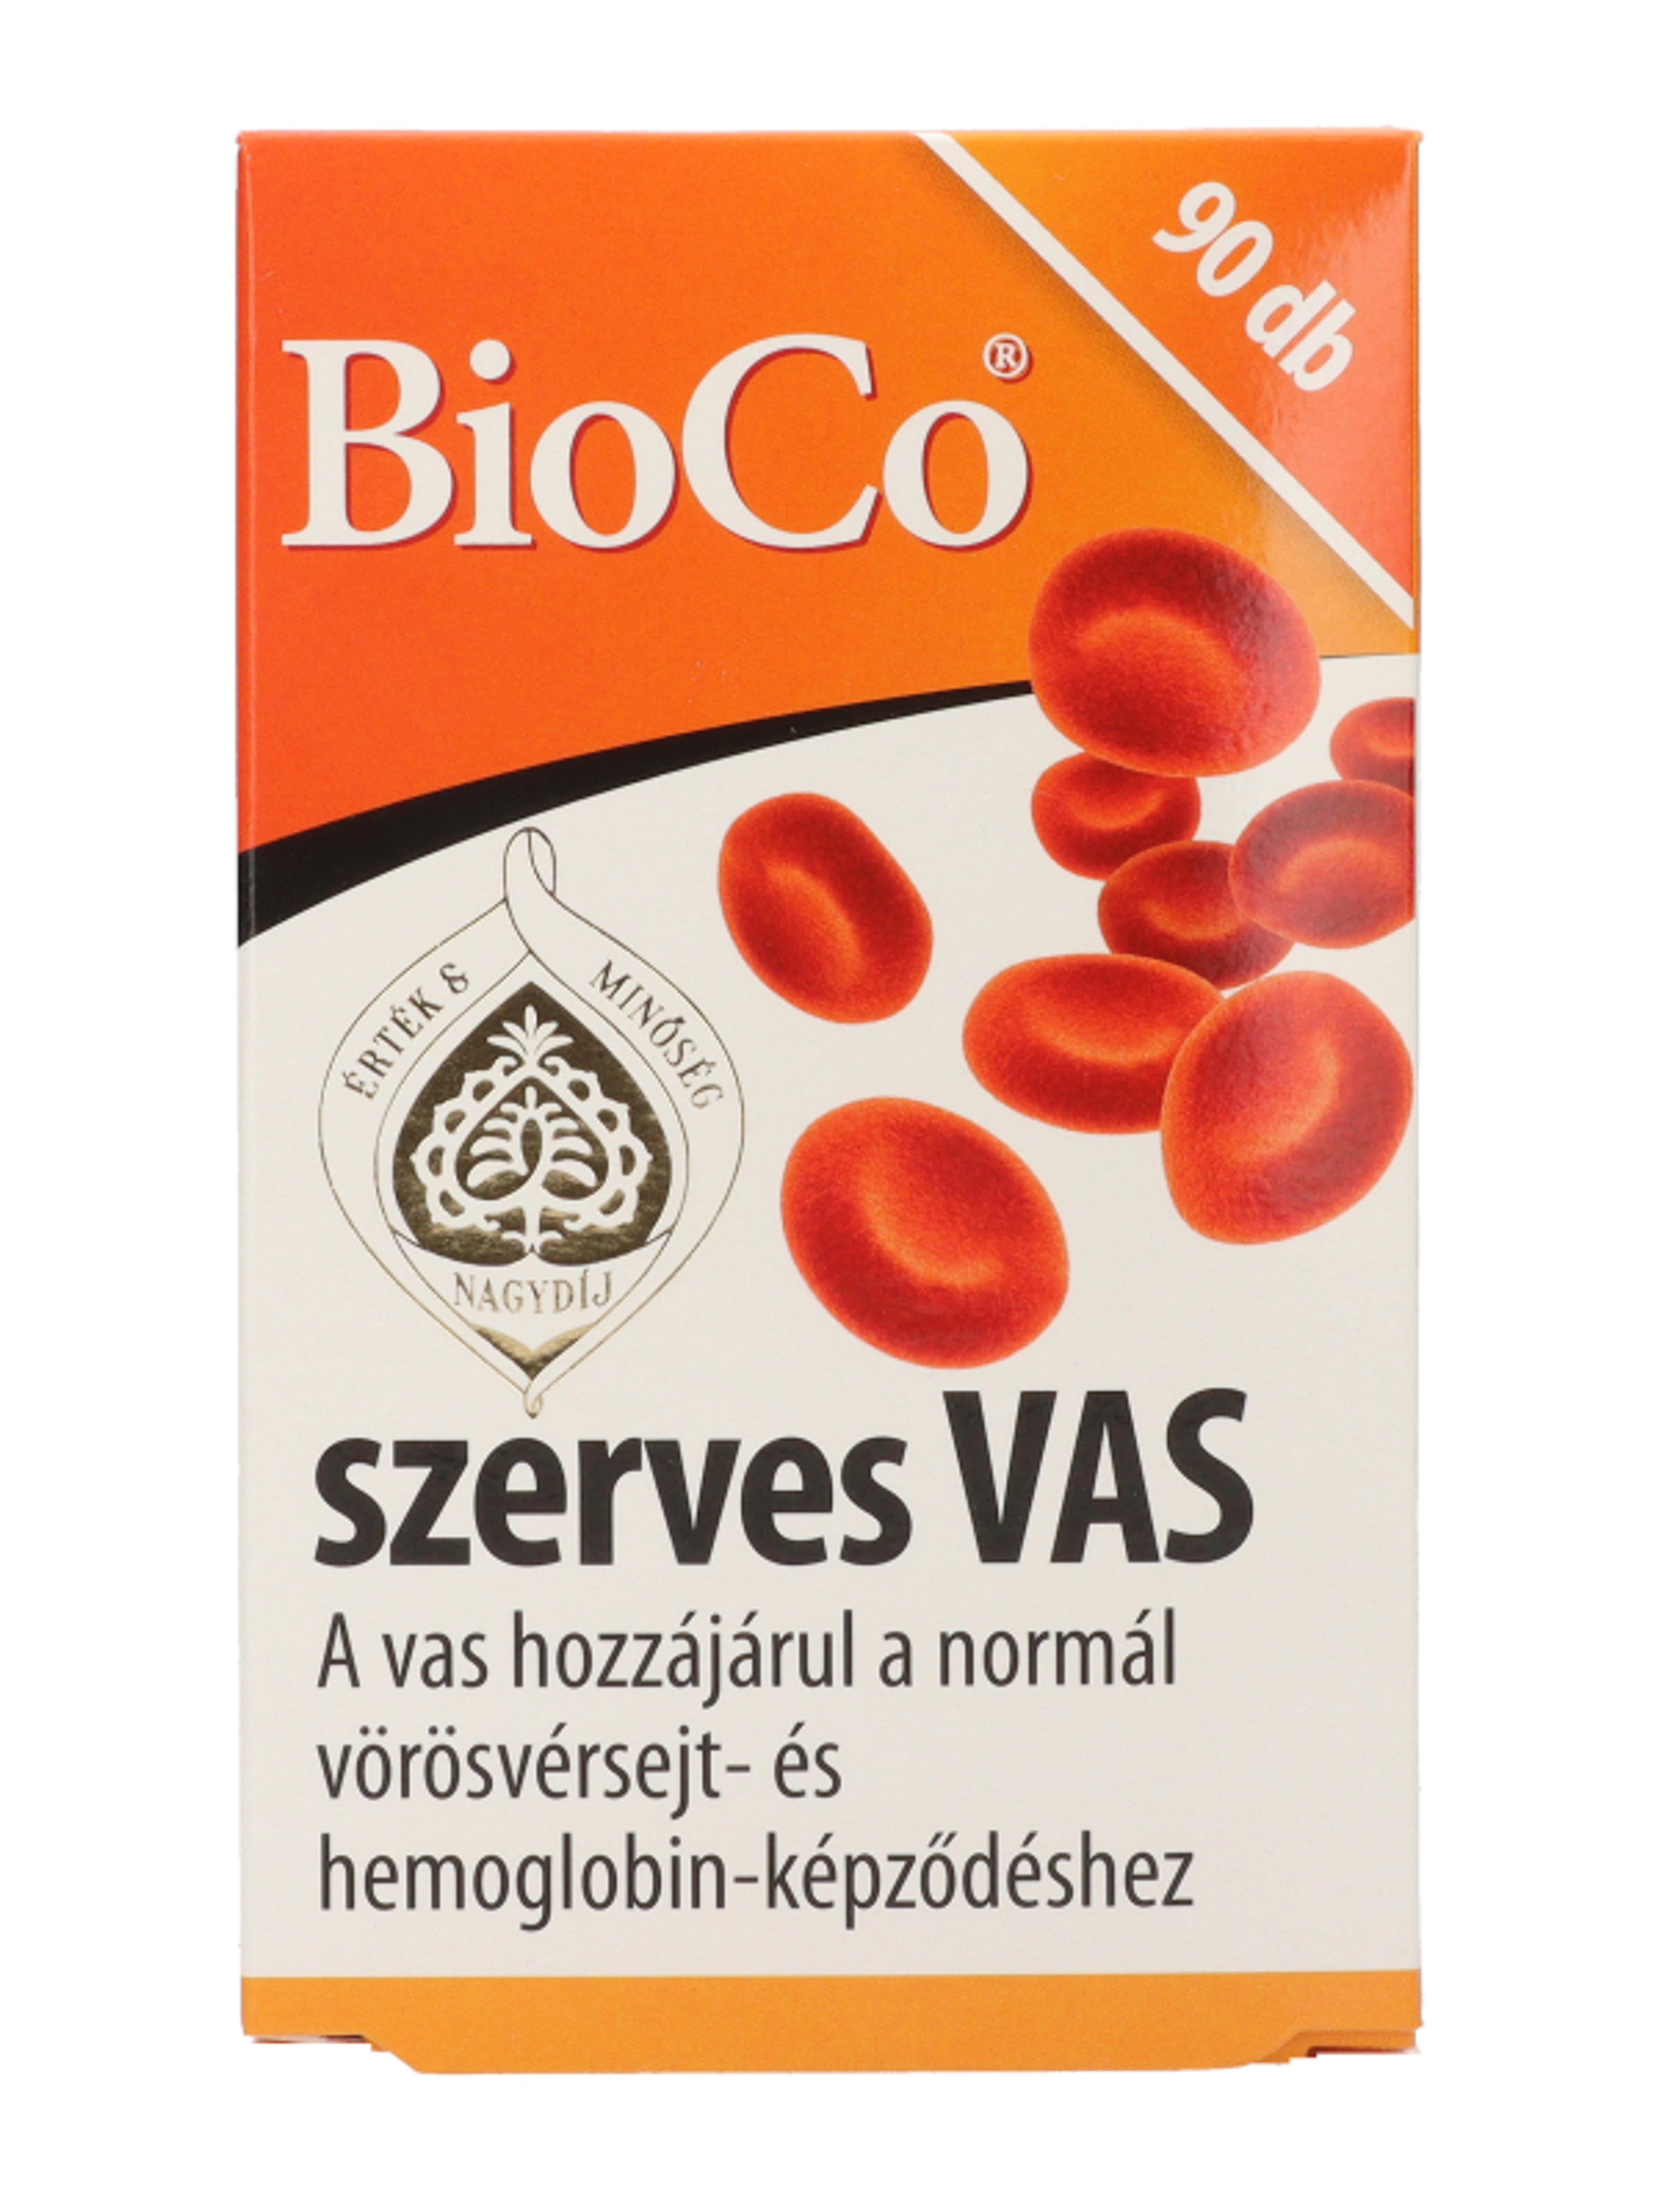 Bioco szerves vas tabletta - 90 db-4